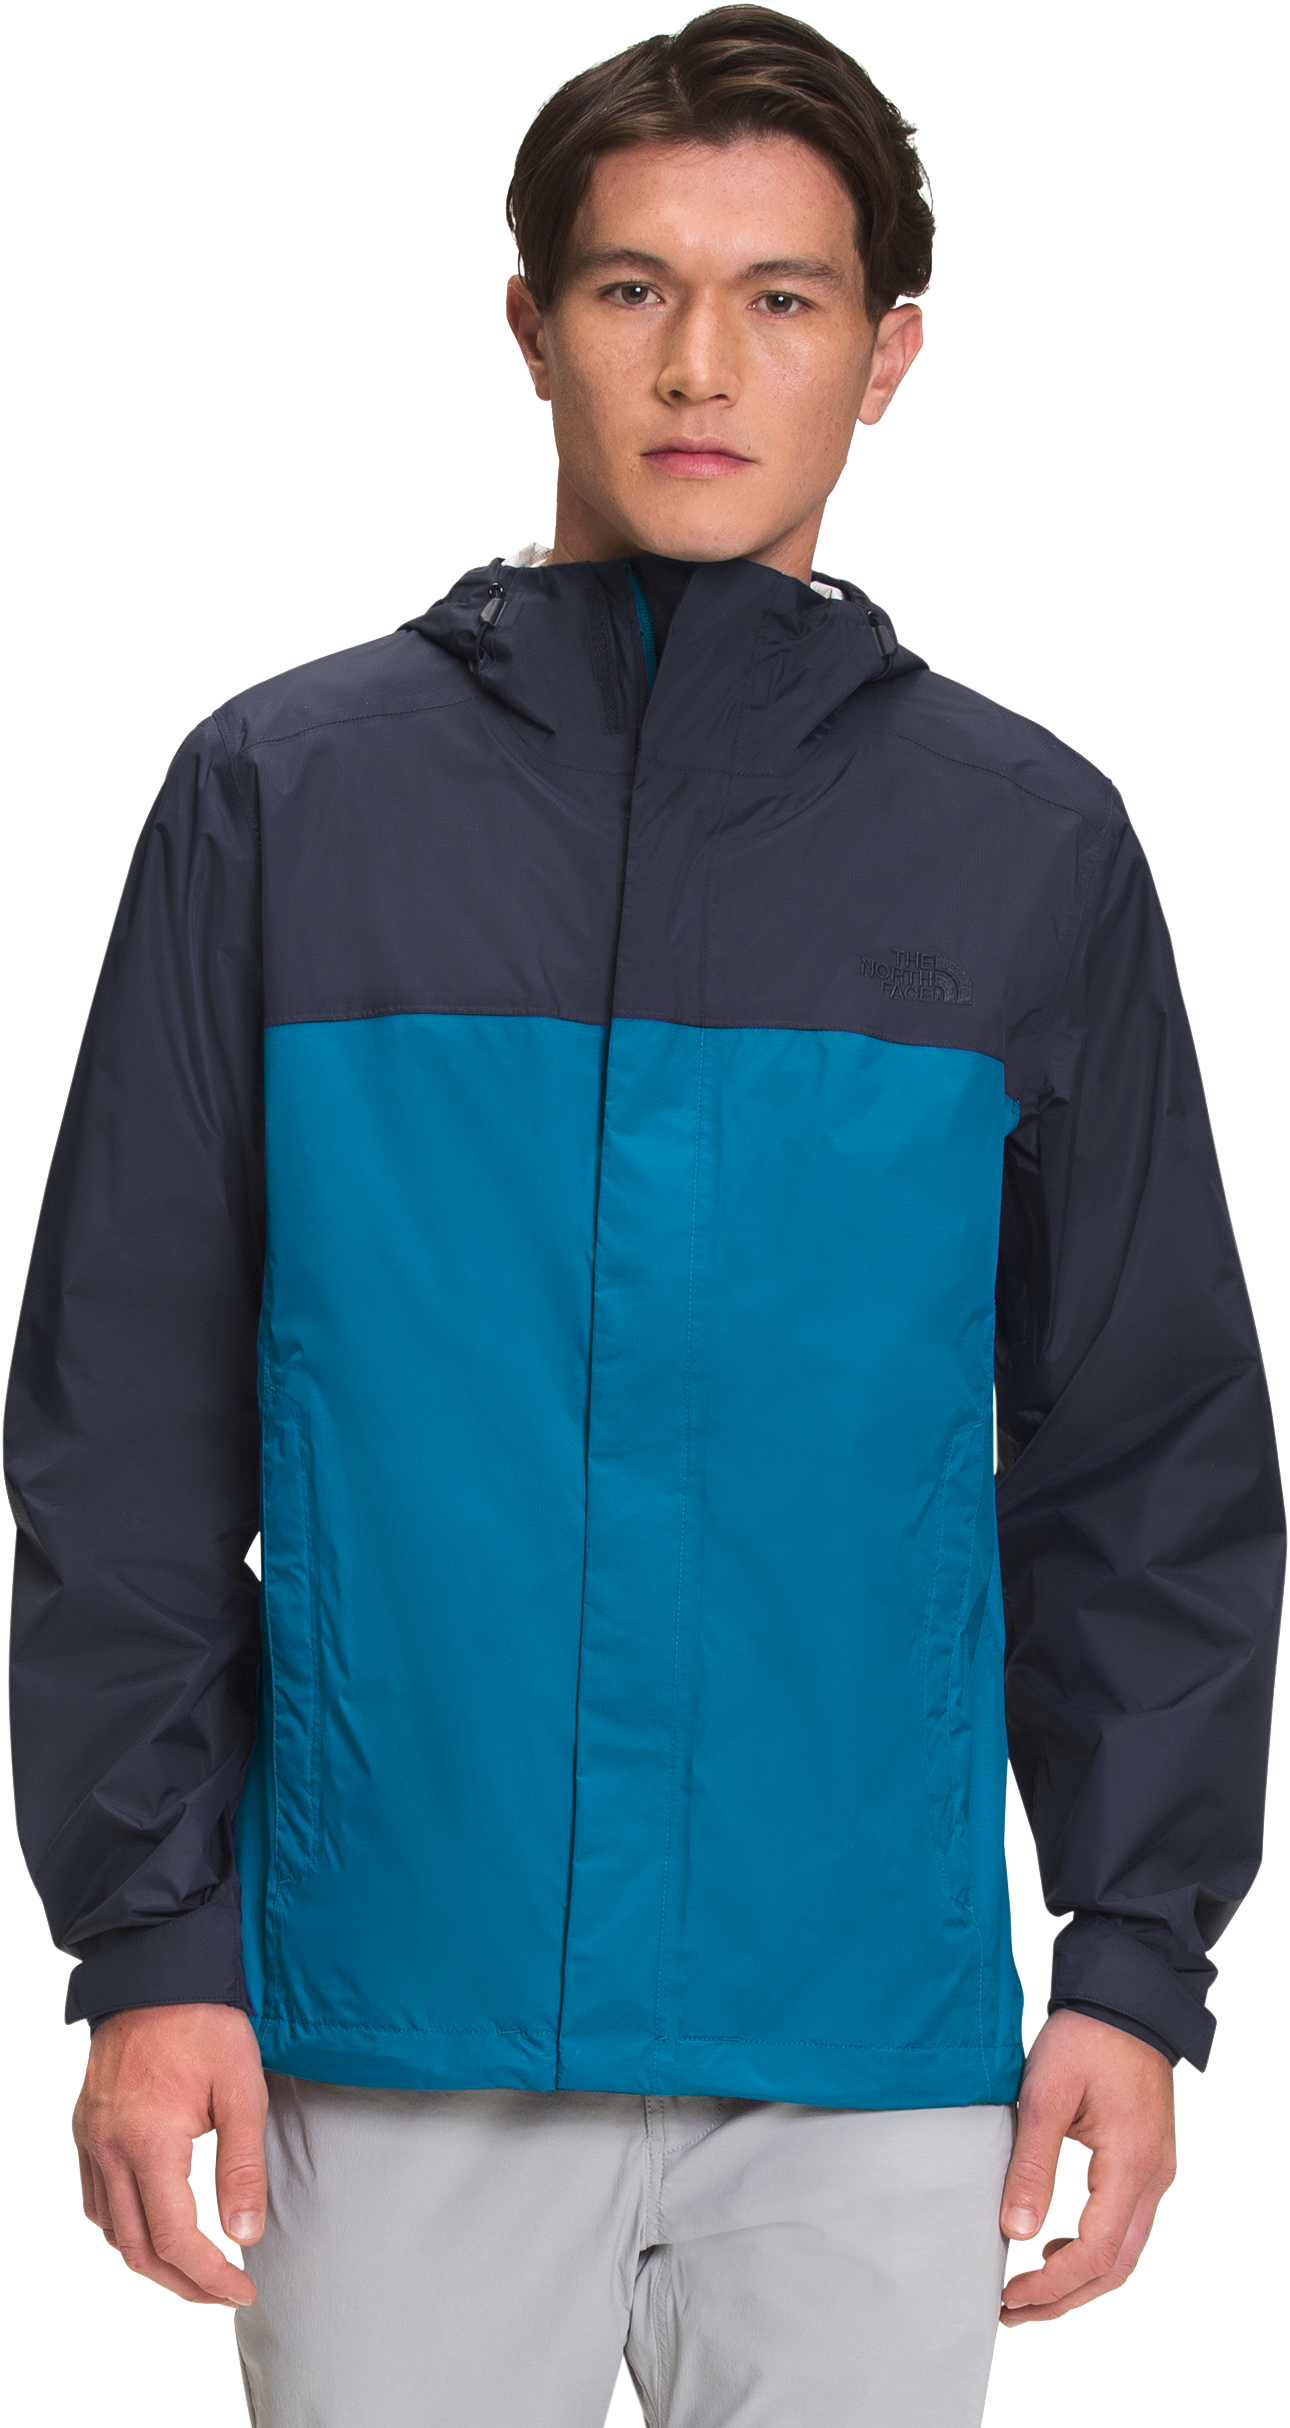 The North Face Venture 2 Jacket for Men - Aviator Navy/Banff Blue - XL